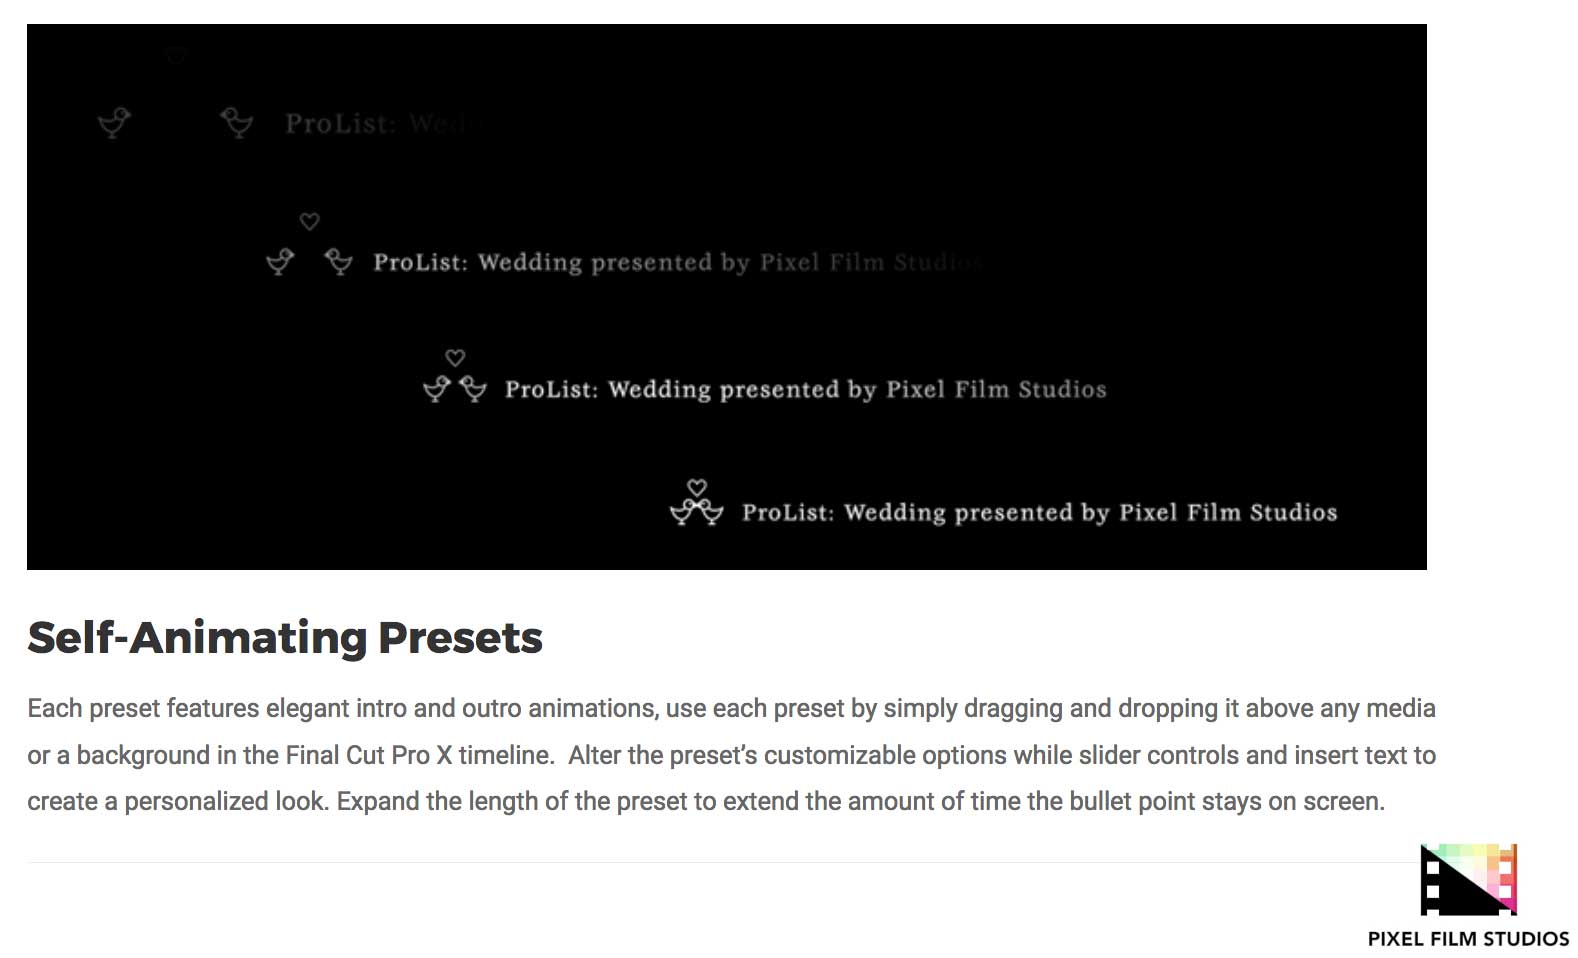 ProList Wedding - Pixel Film Studios Plugins - Final Cut Pro X Effects